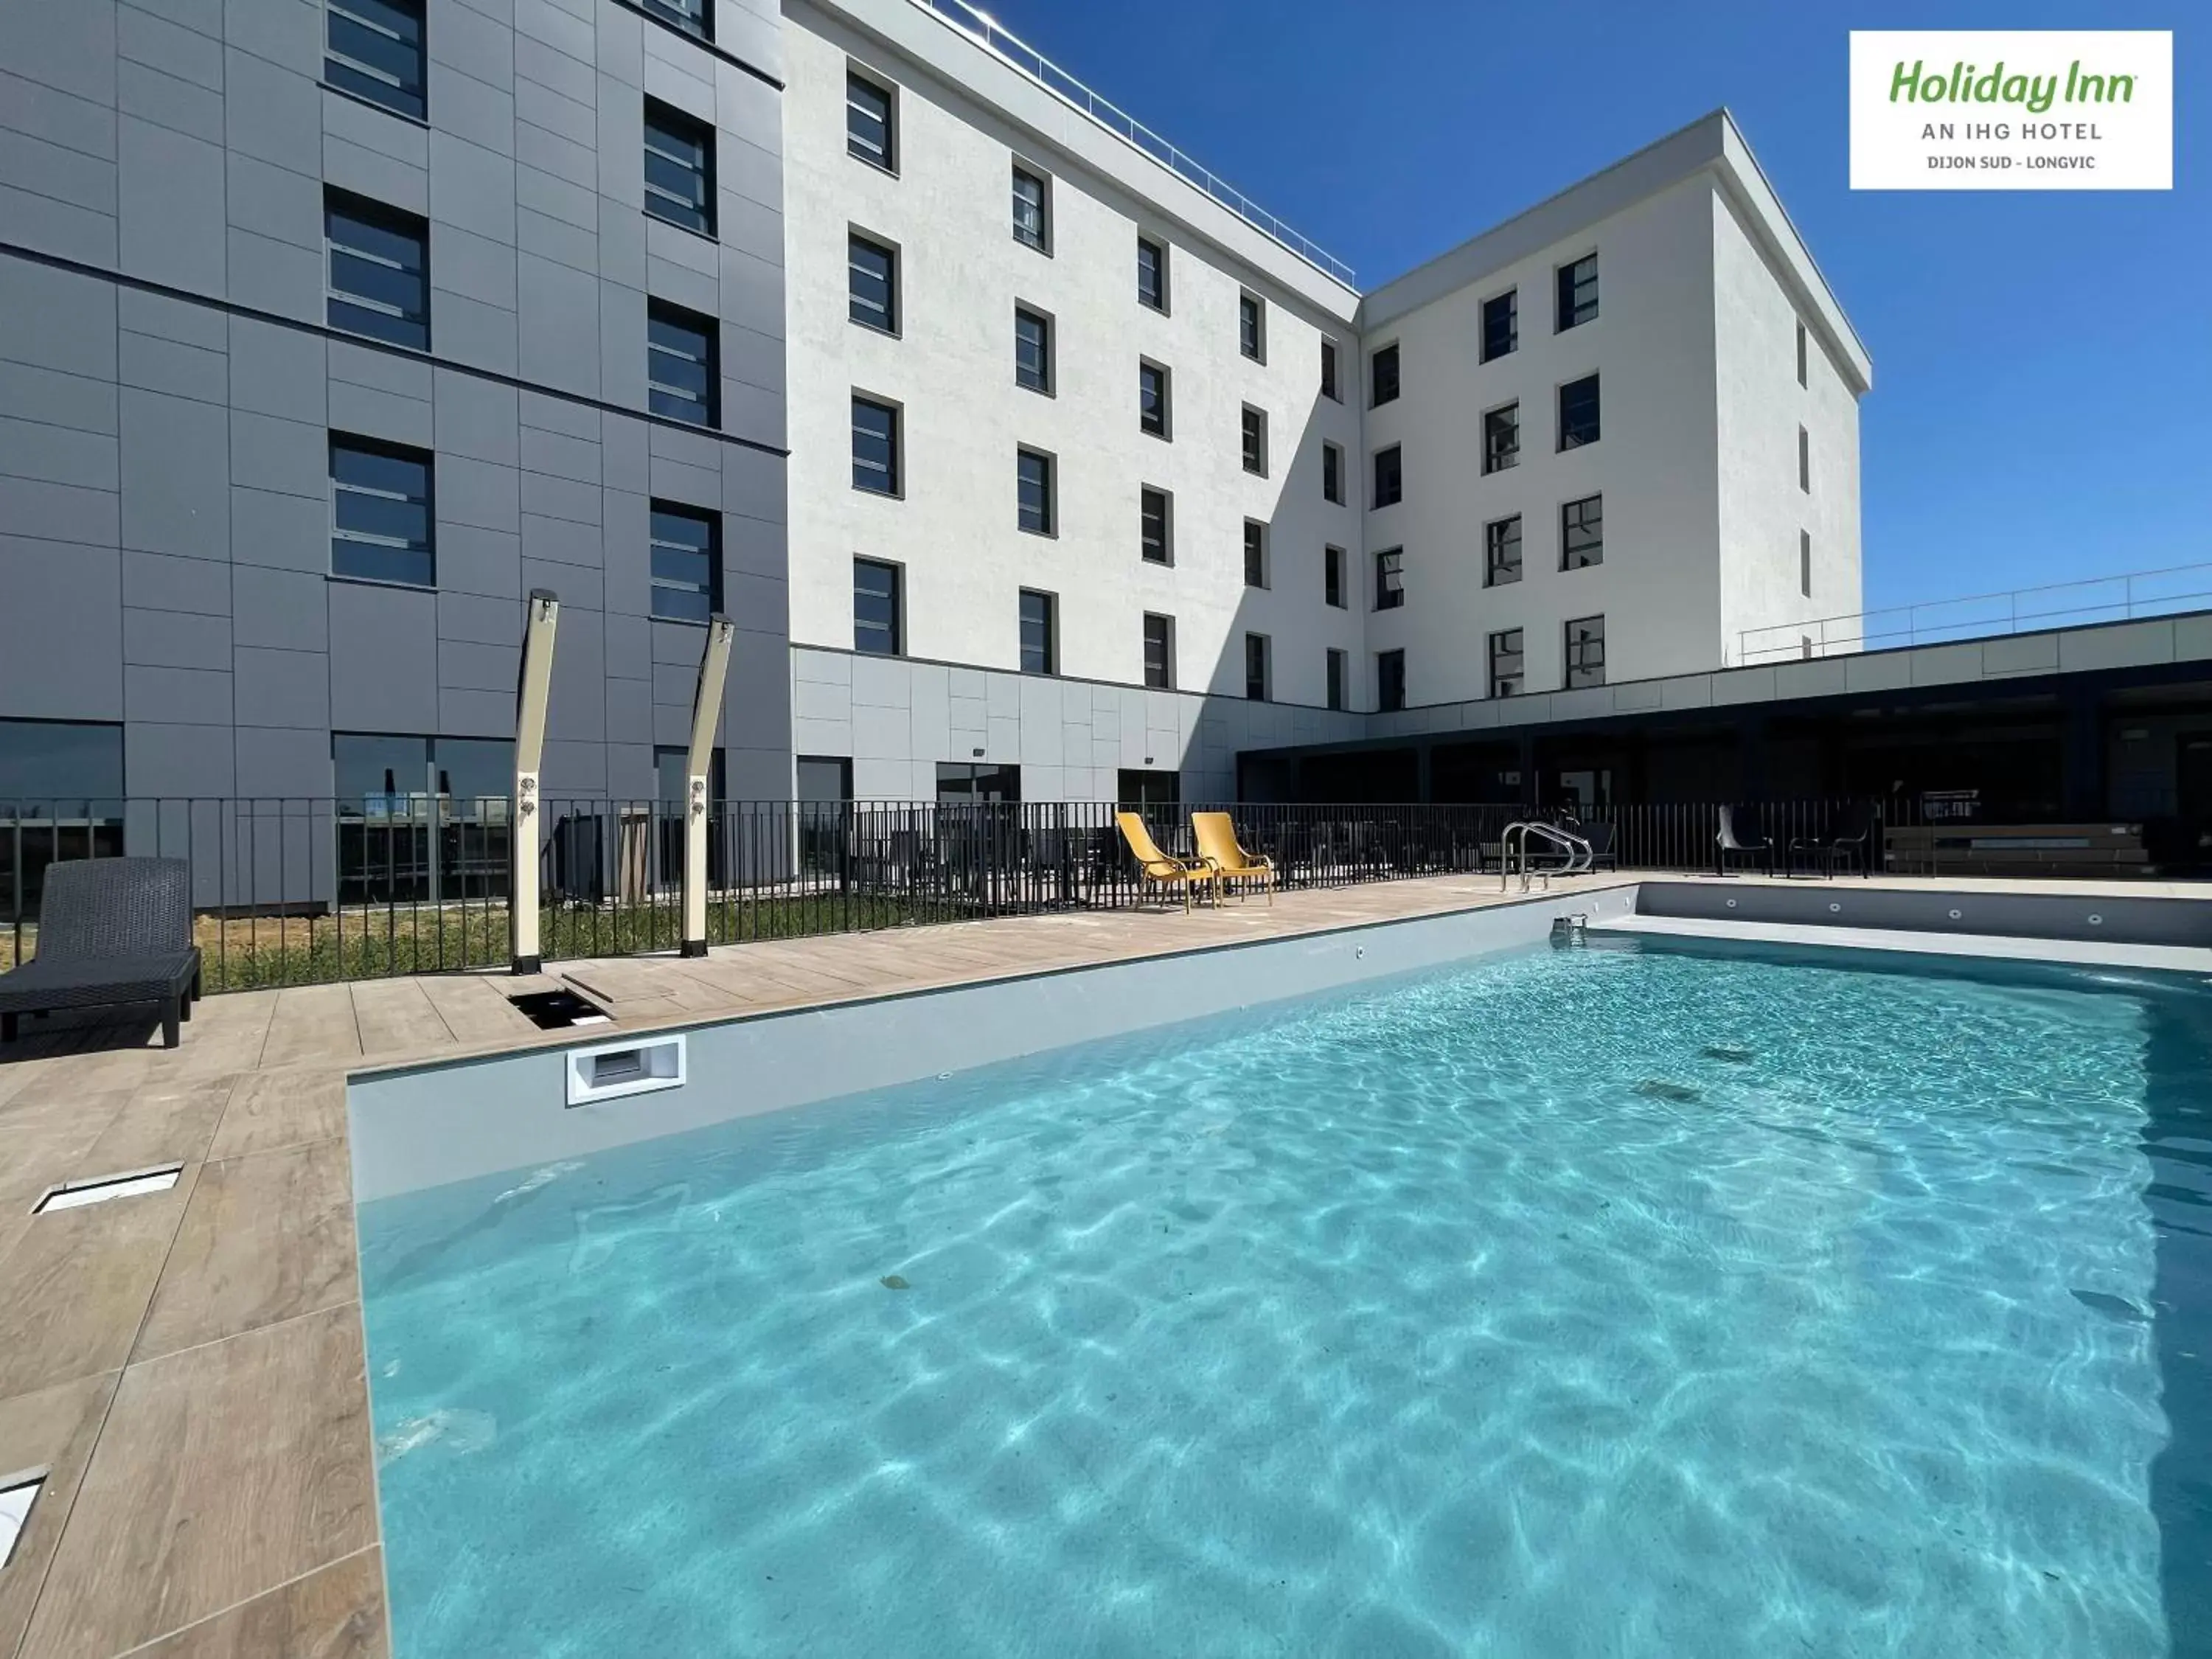 Property building, Swimming Pool in Holiday Inn Dijon Sud - Longvic, an IHG Hotel